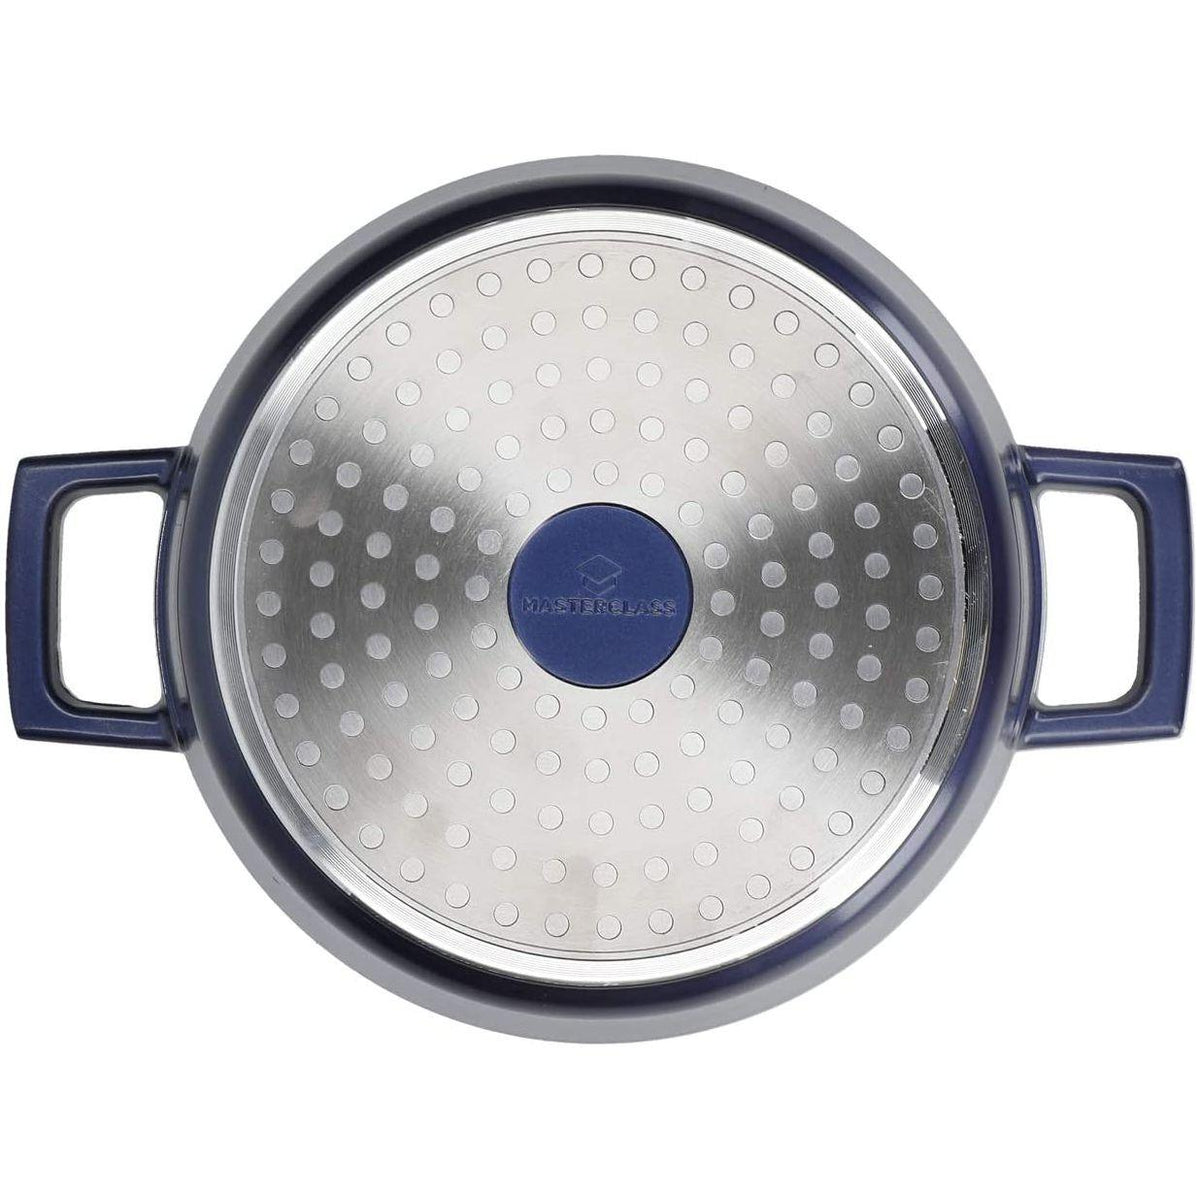 Metallic Blue Cast Aluminum Casserole Dish 2.5 Litre - BESPOKE77